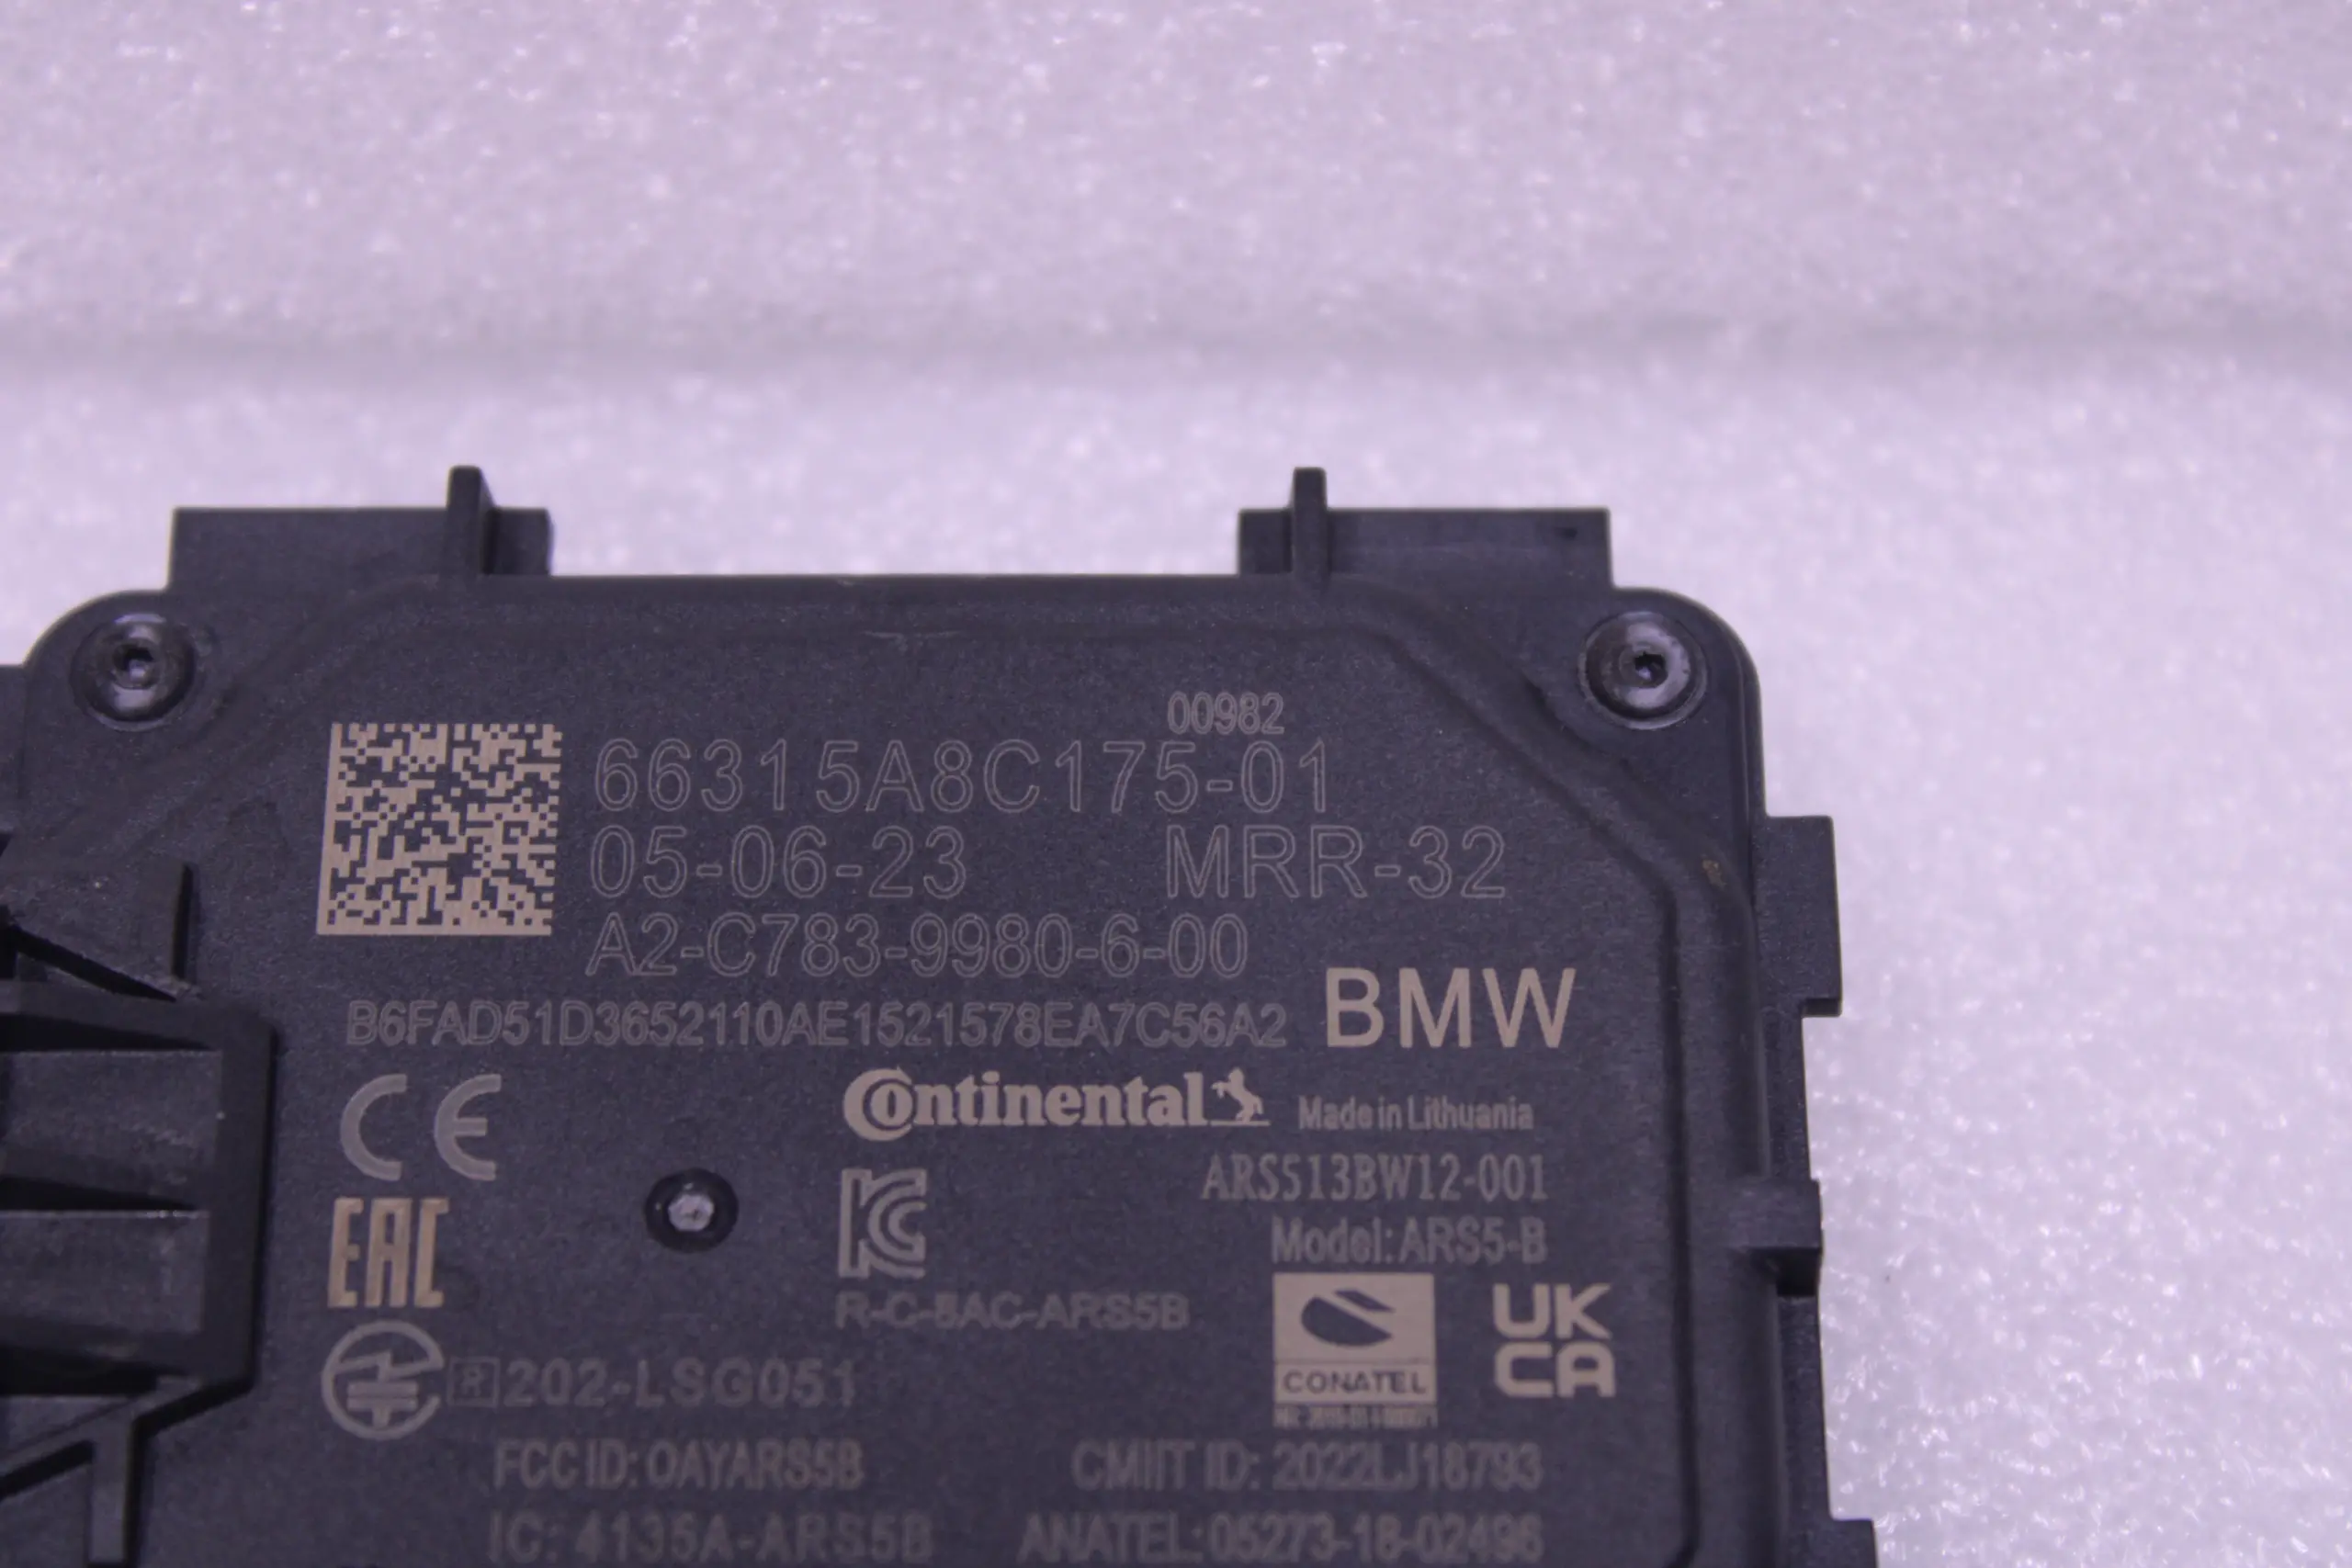 BMW U06 G60 G70 U11 U10 Front Radar Sensor 66315A8C175